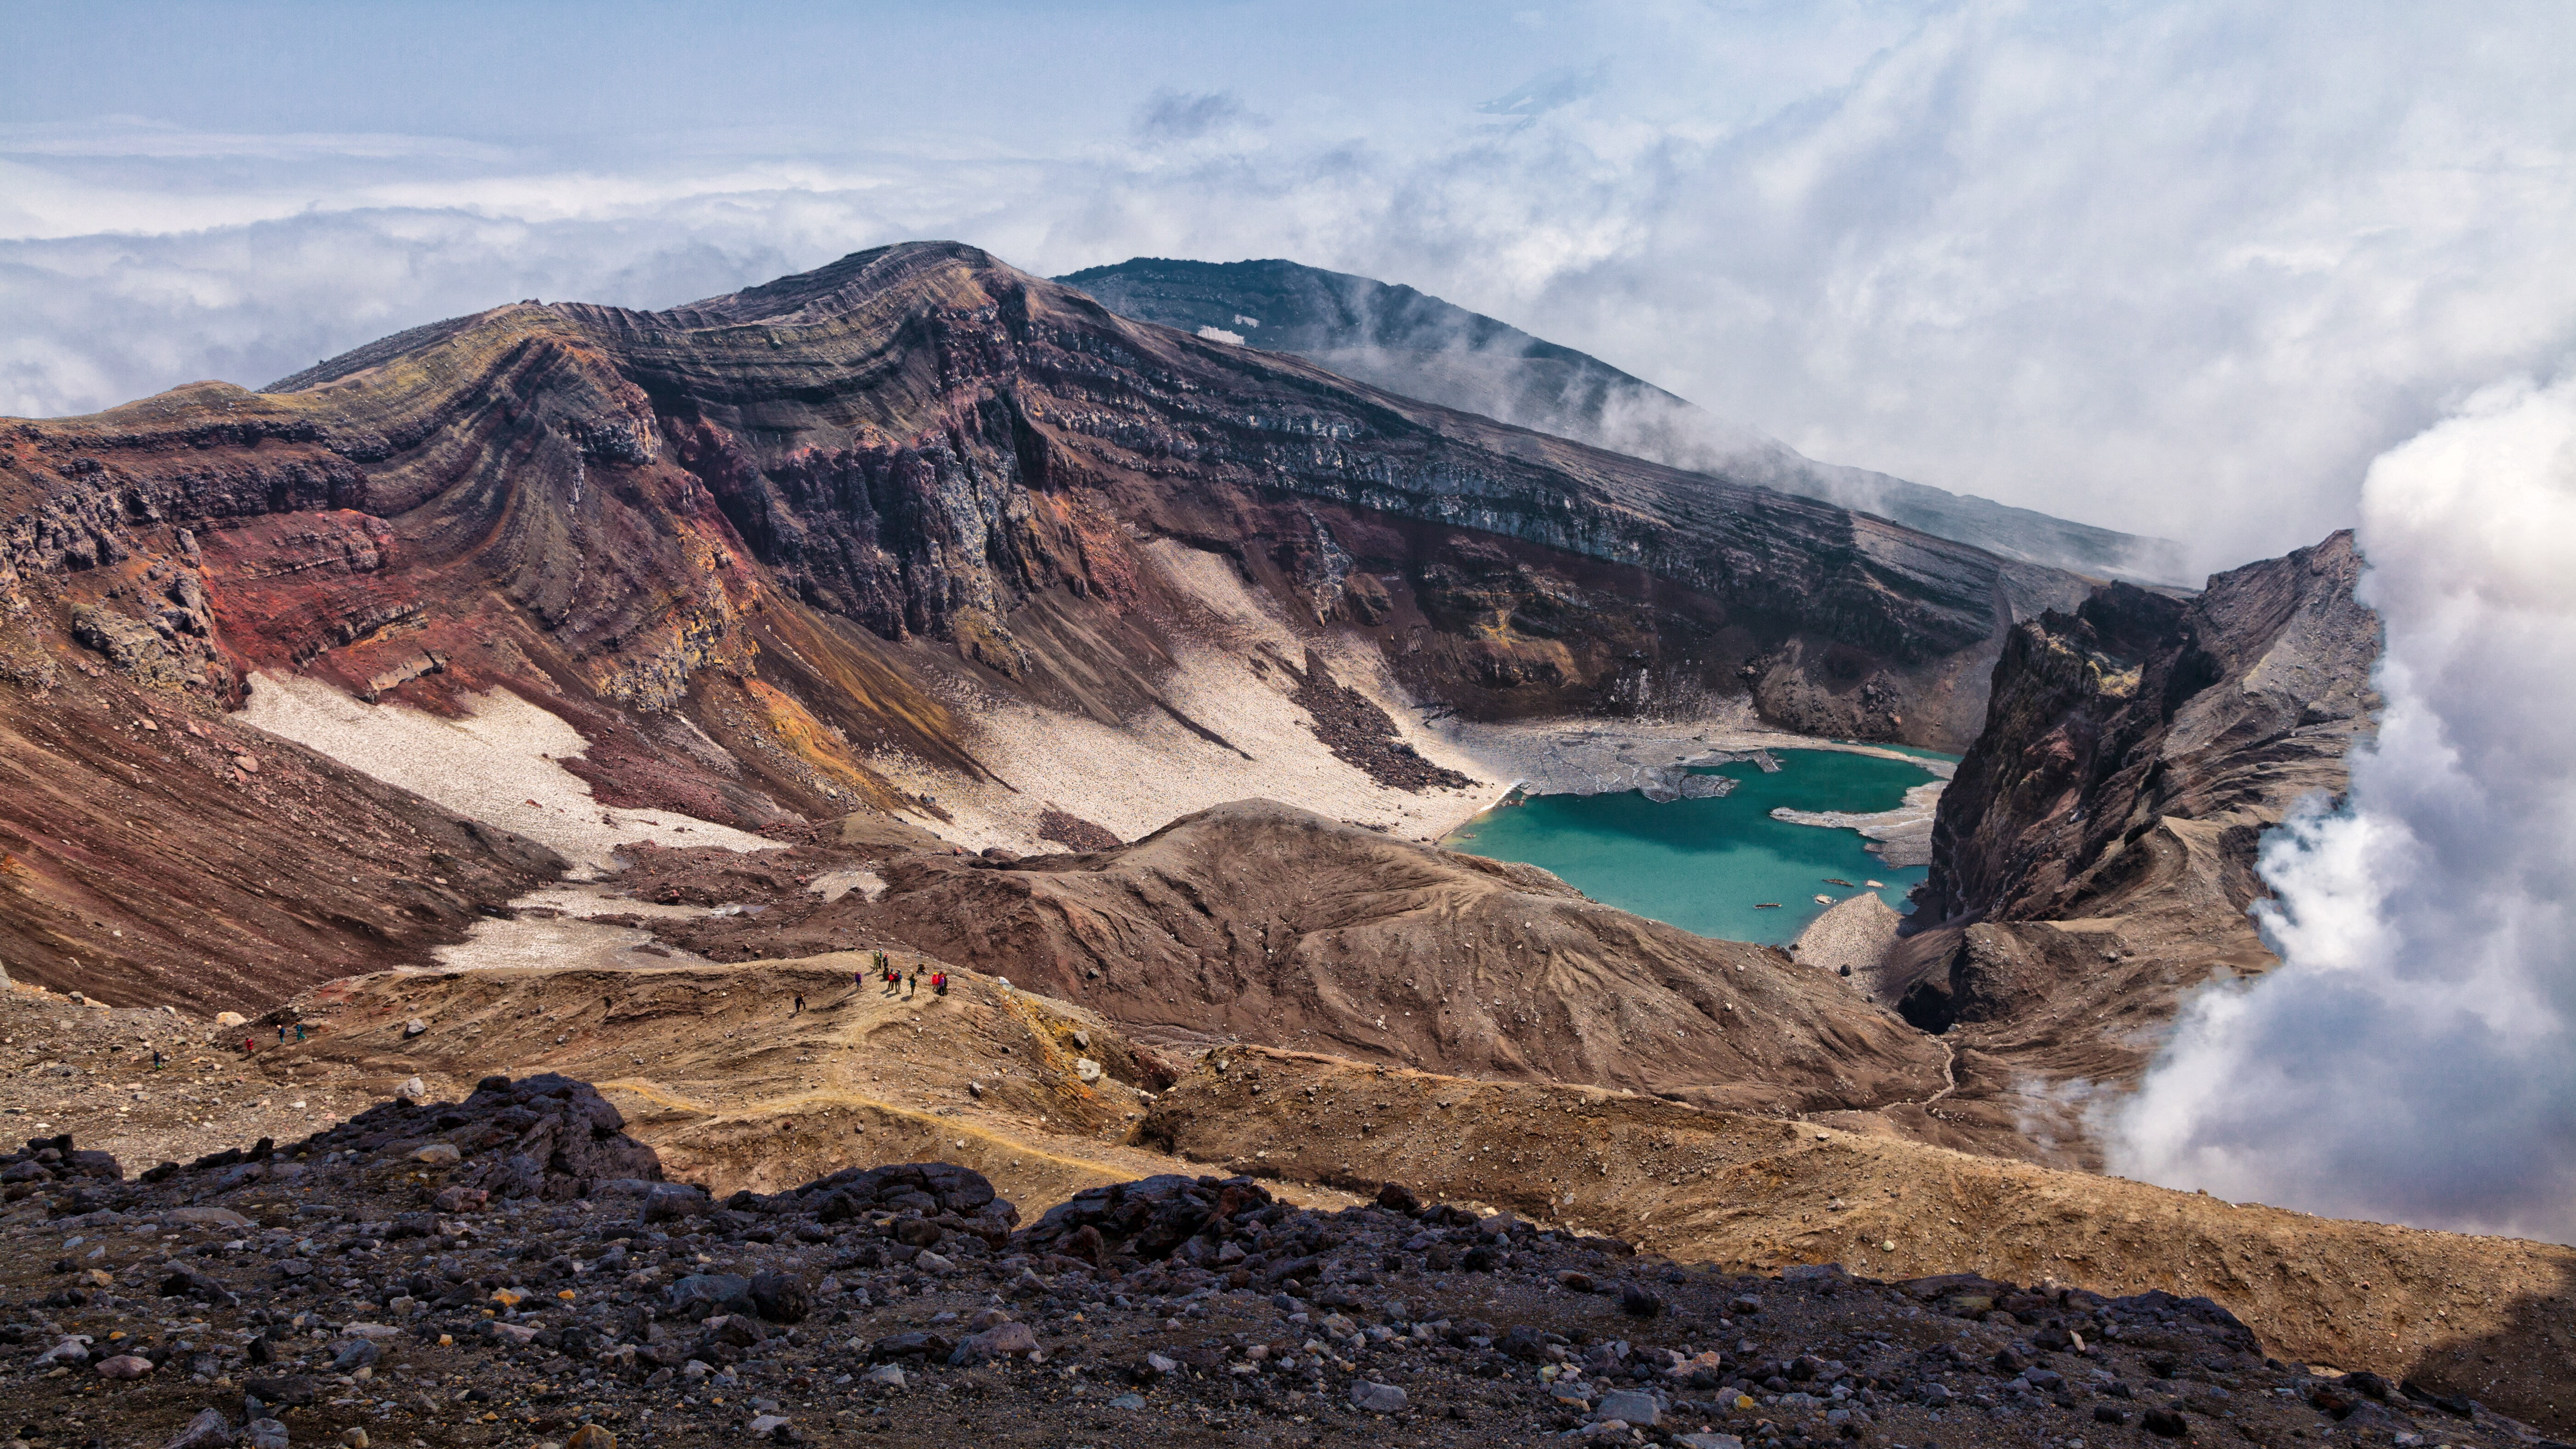 kamchatka volcano lake, mountain, scenics - nature, environment